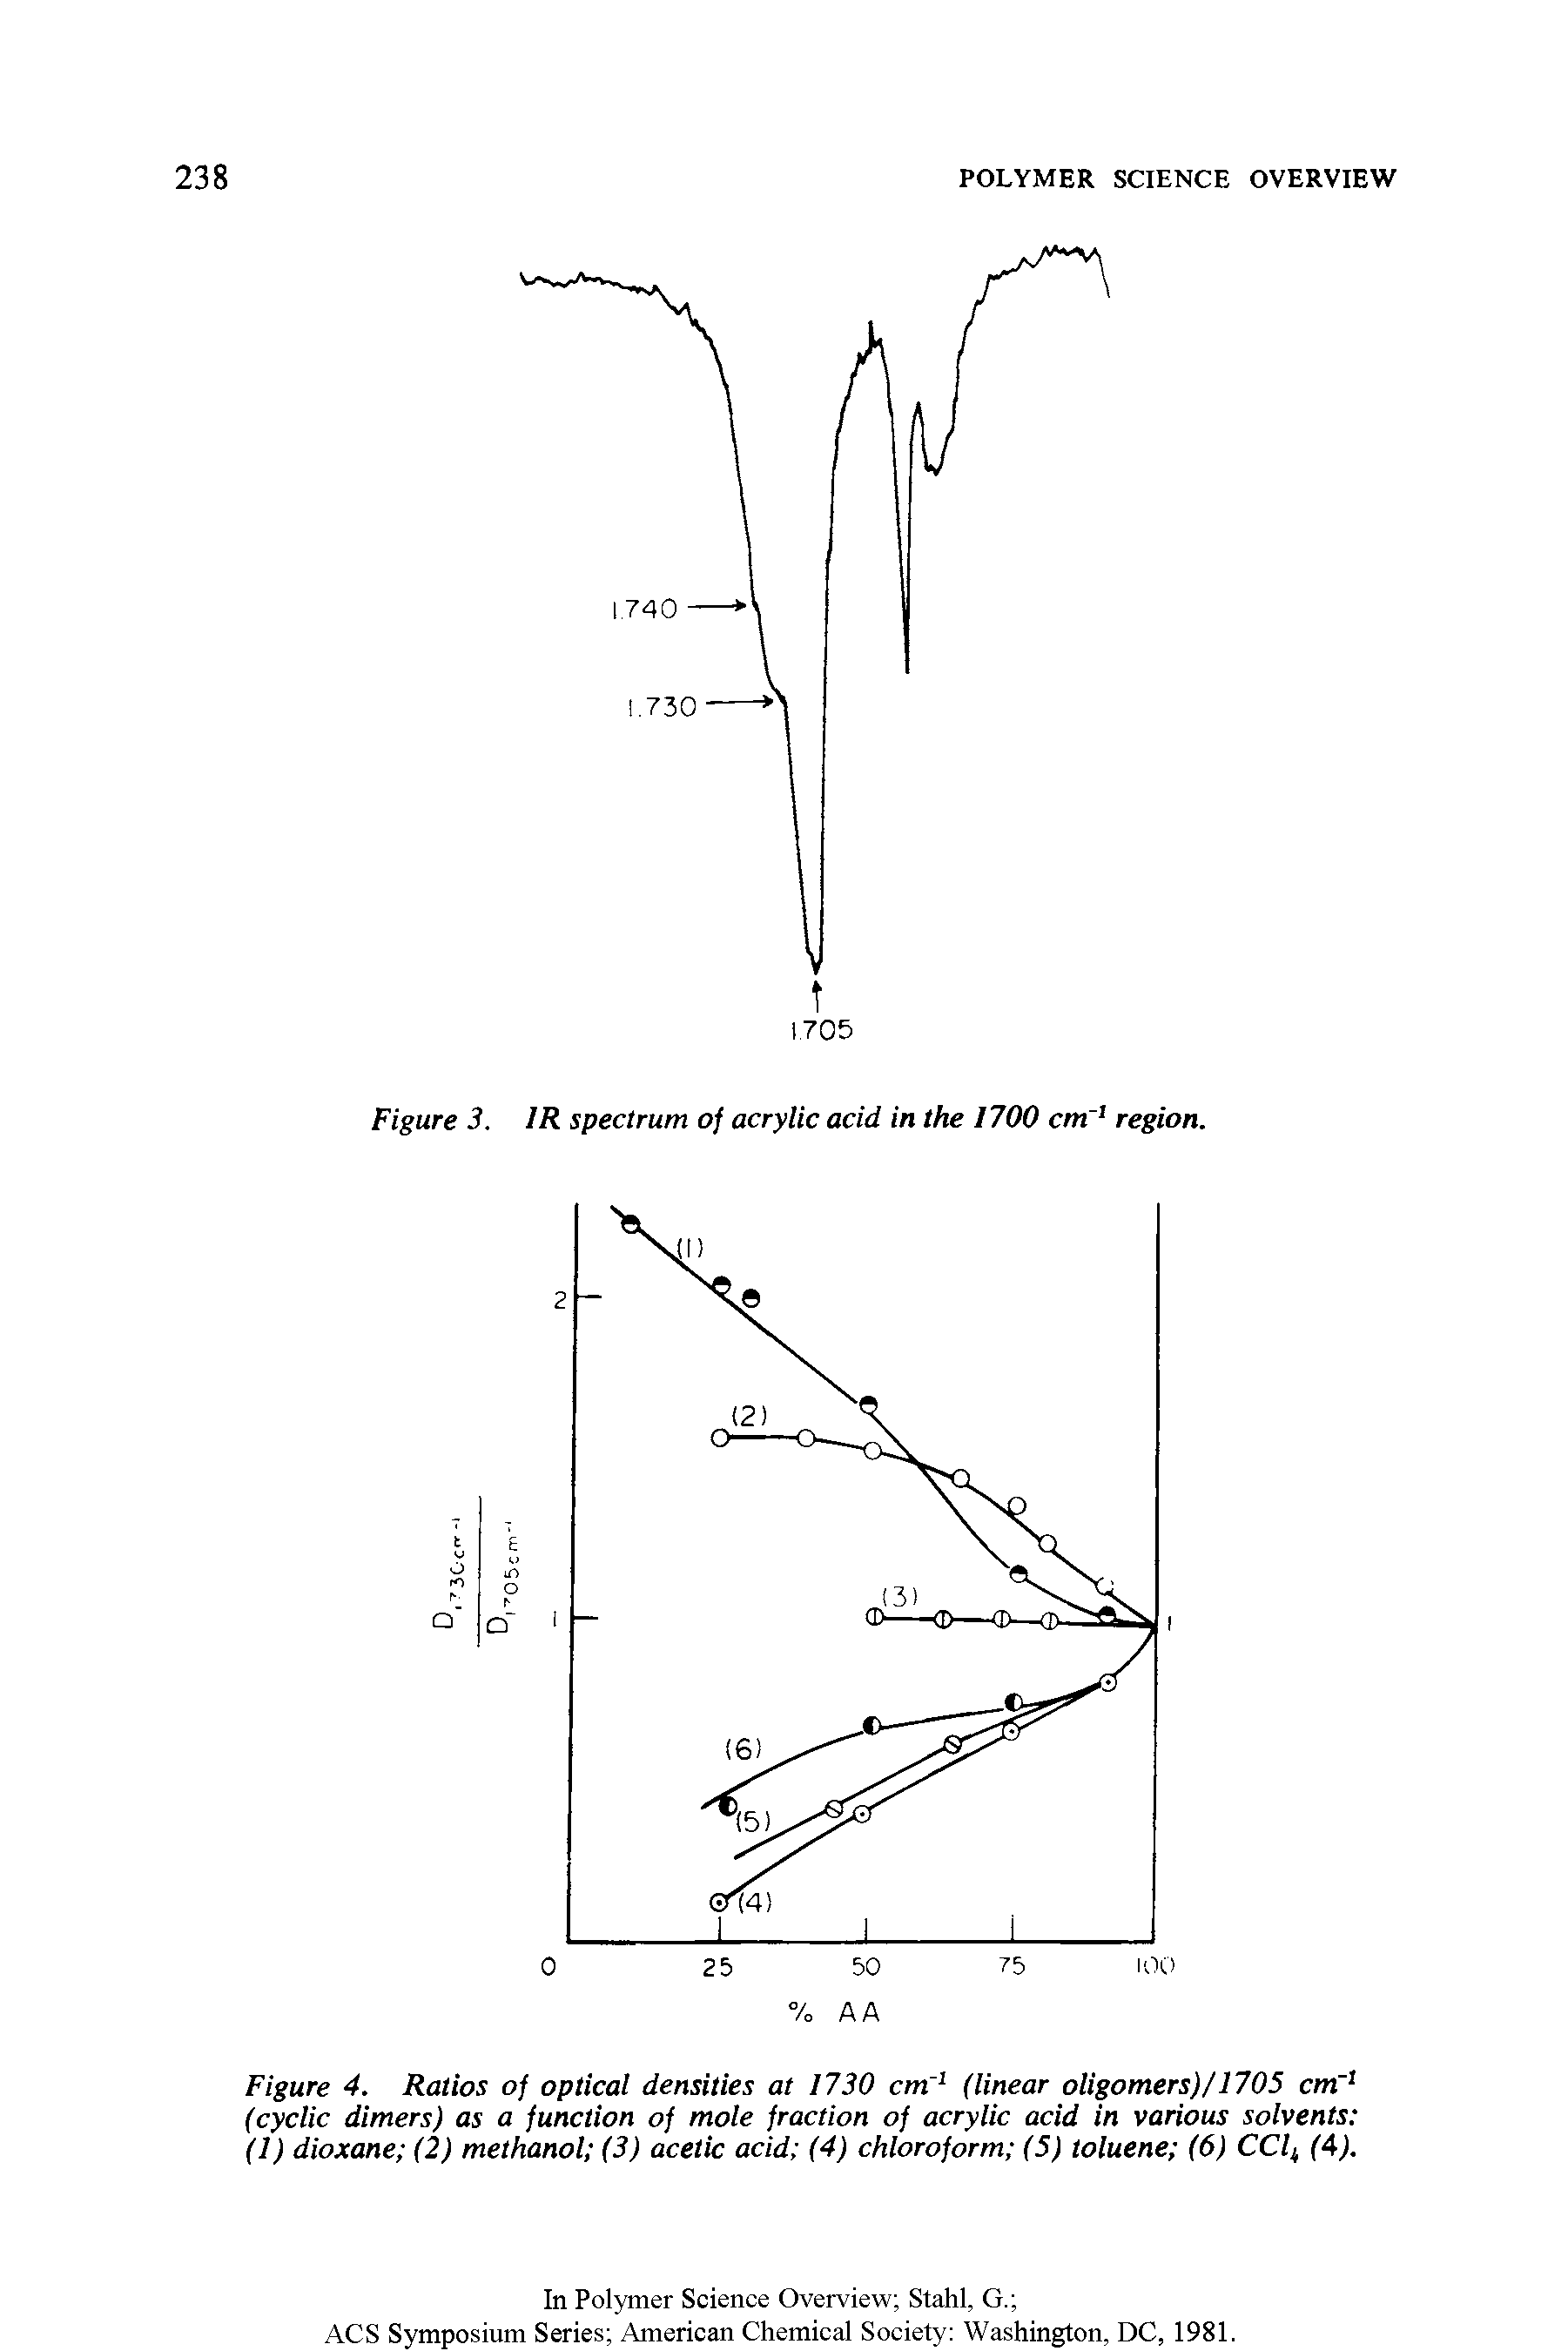 Figure 4. Ratios of optical densities at 1730 cm1 (linear oligomers)/1705 cm"1 (cyclic dimers) as a function of mole fraction of acrylic acid in various solvents (1) dioxane (2) methanol (3) acetic acid (4) chloroform (5) toluene (6) CClk (4).